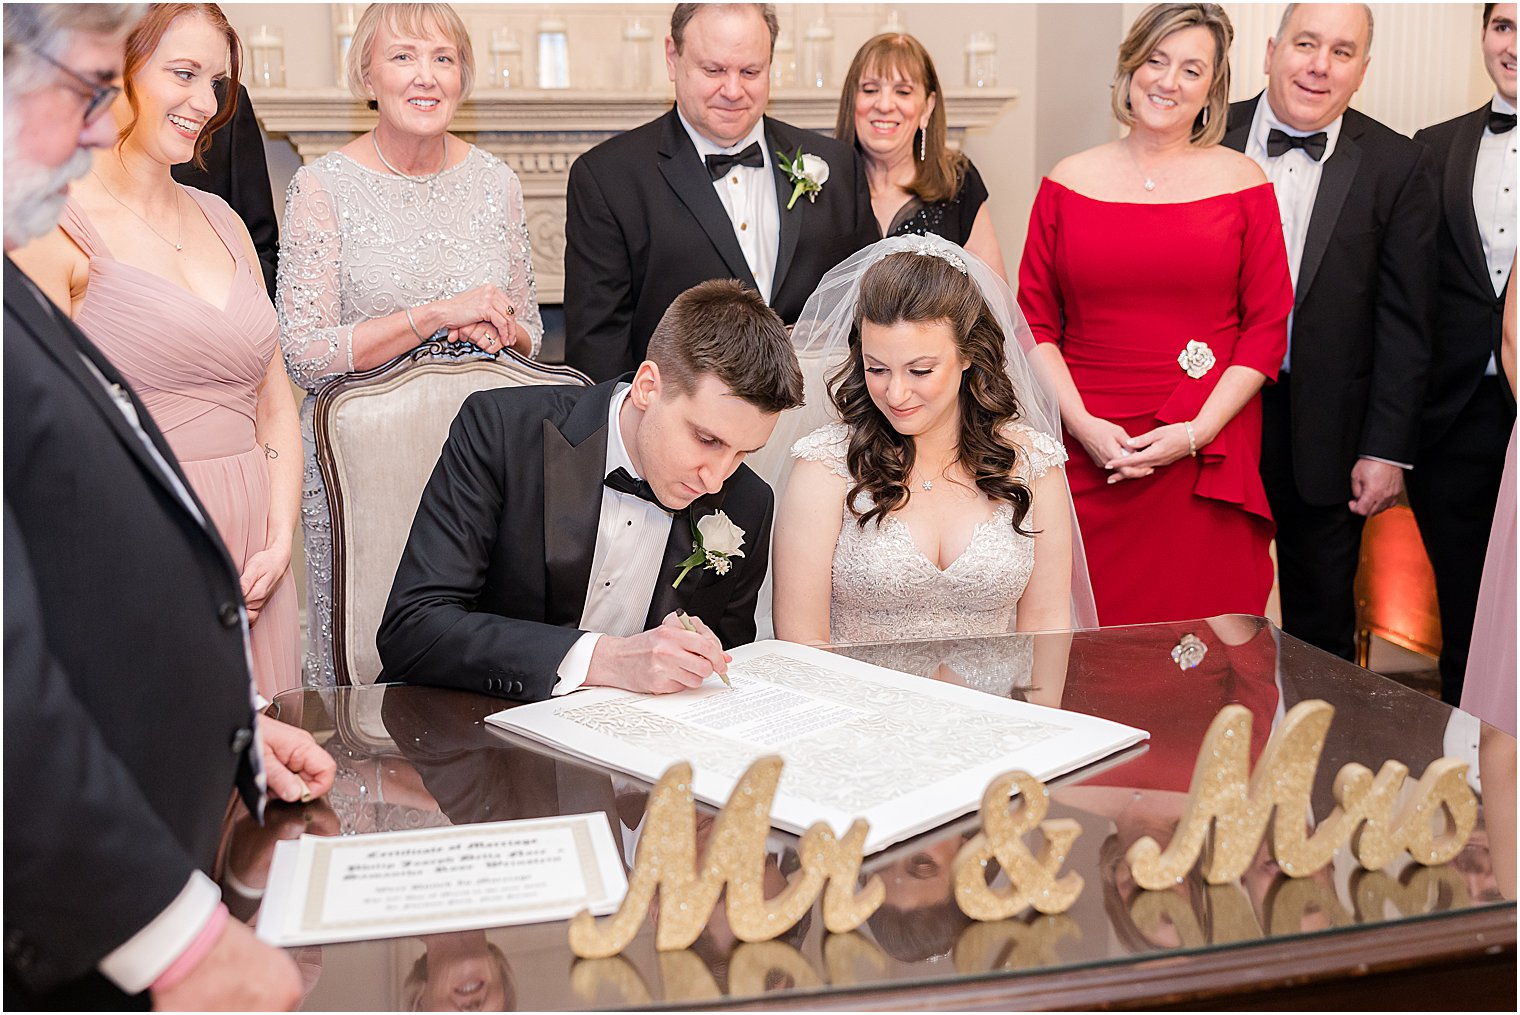 groom signs Ketubah during Jewish wedding ceremony 